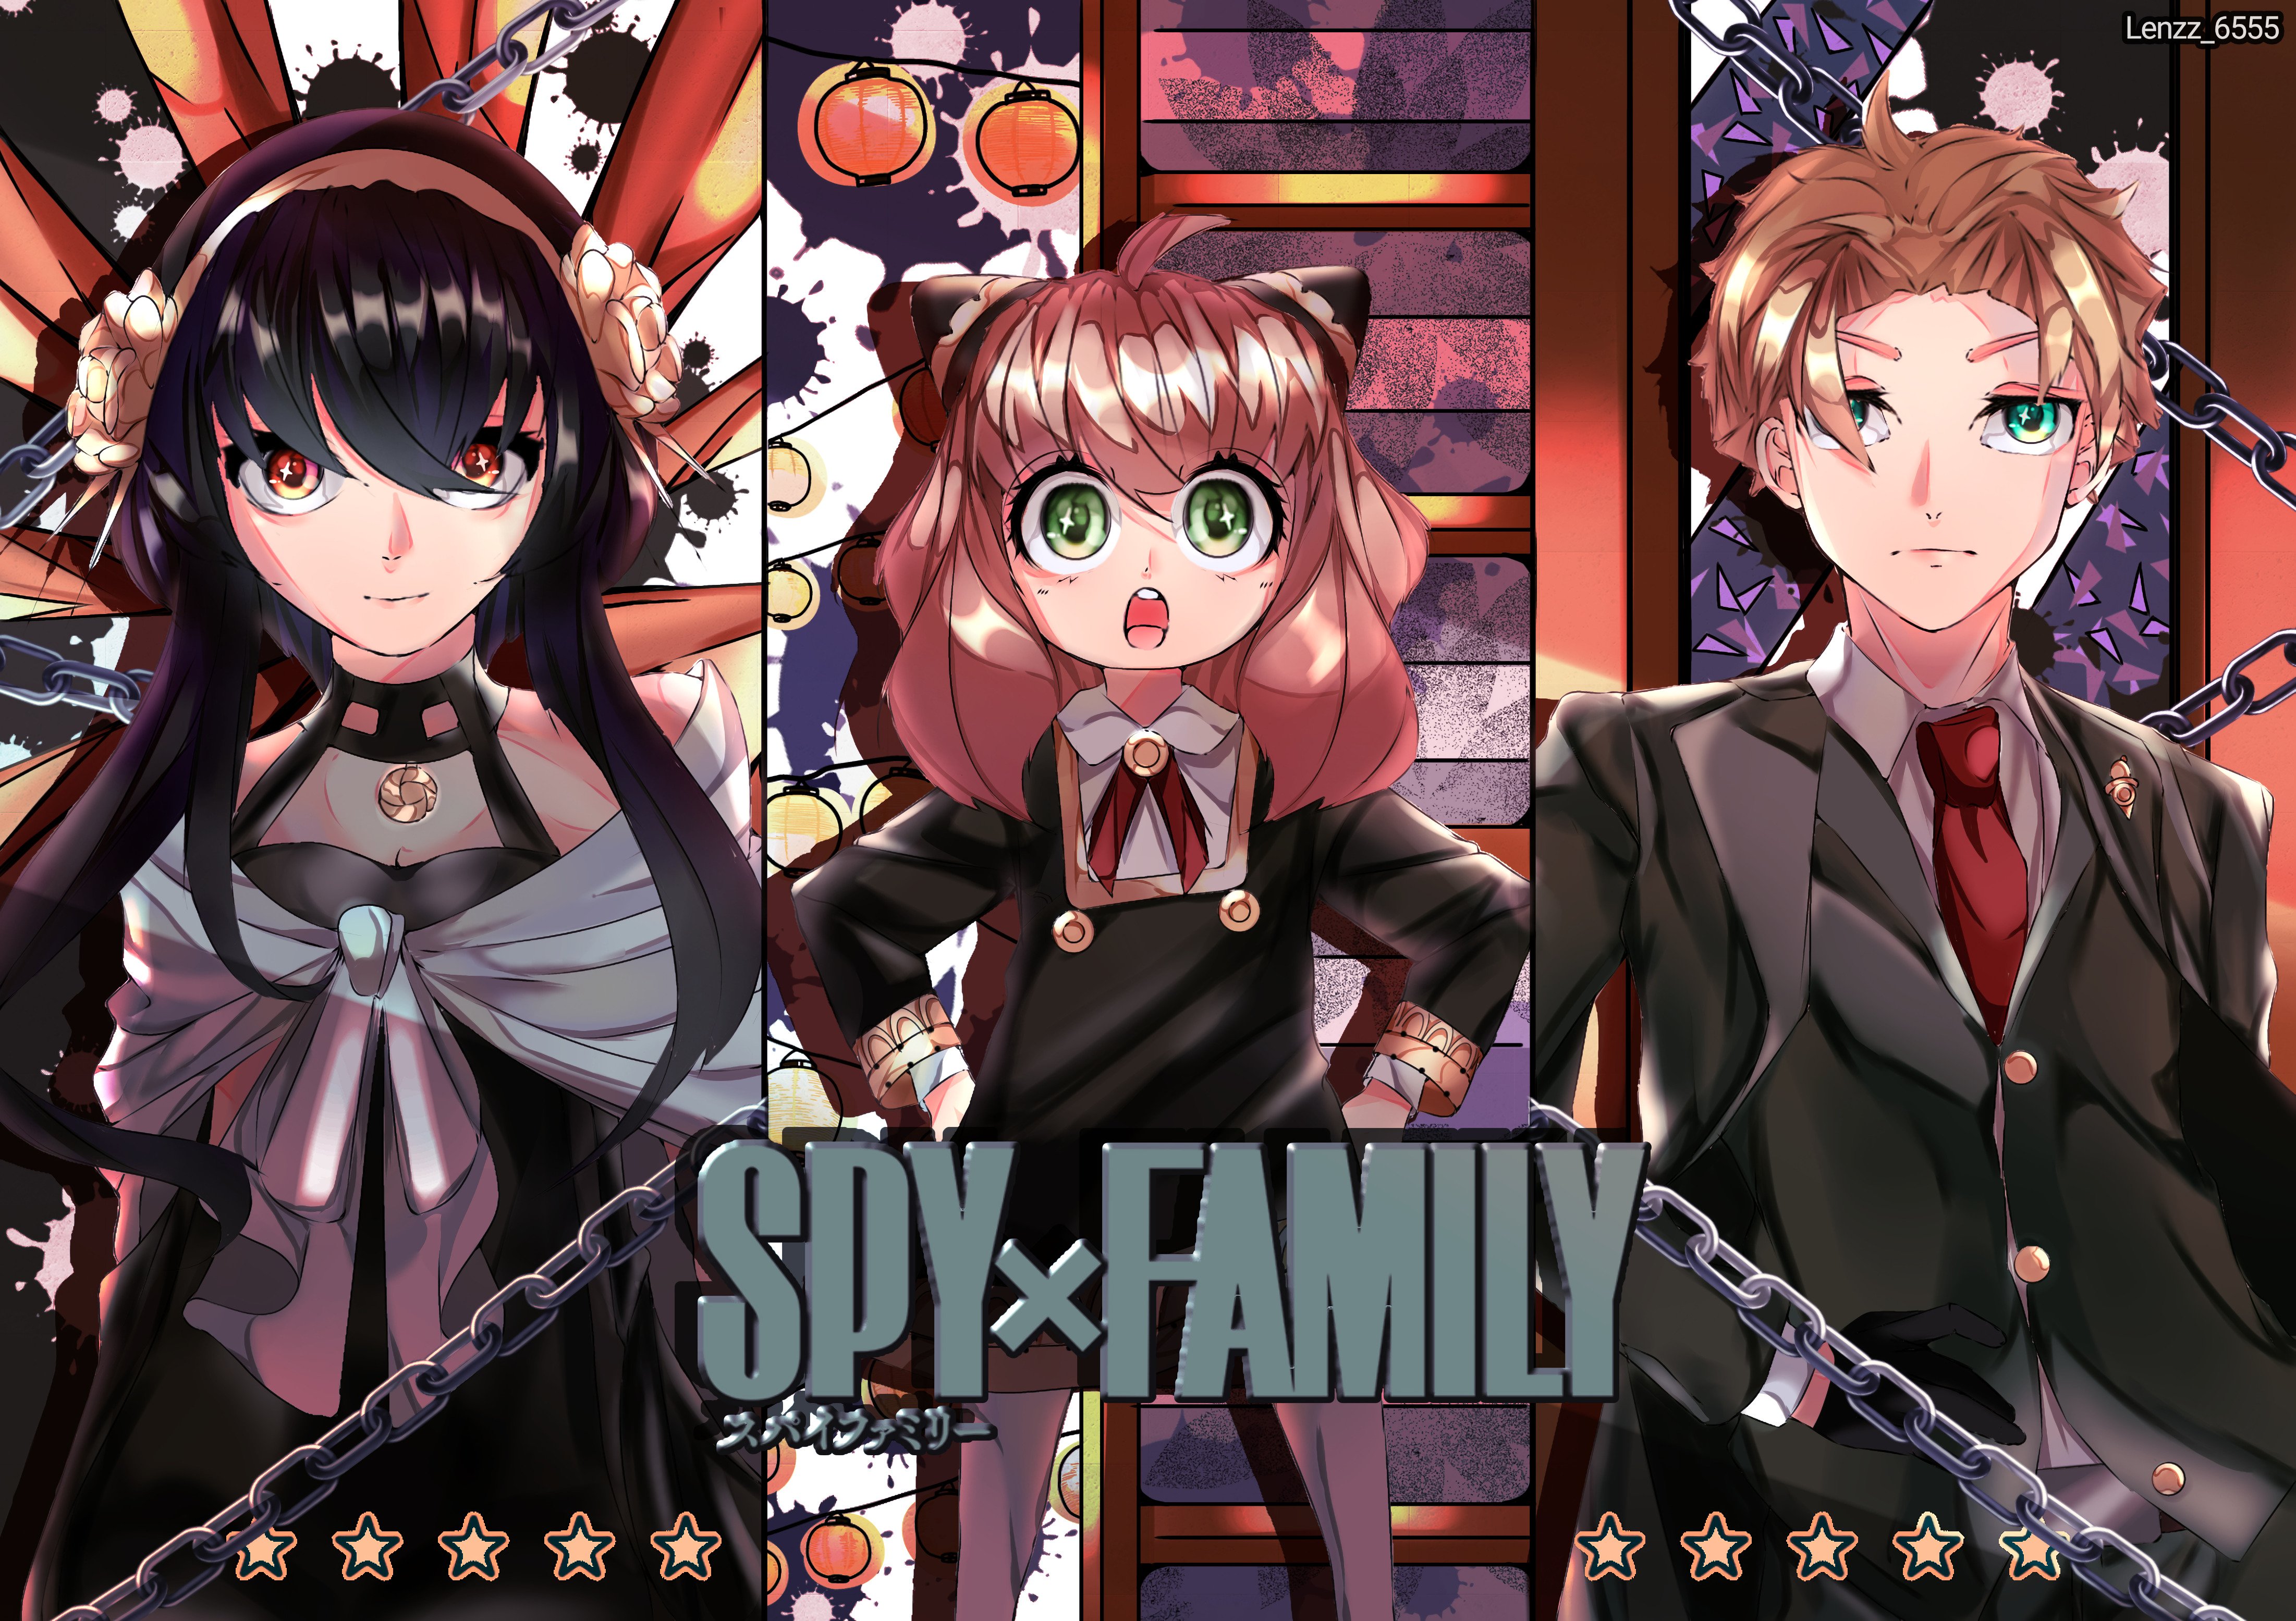 Fondos de pantalla Spy x Family